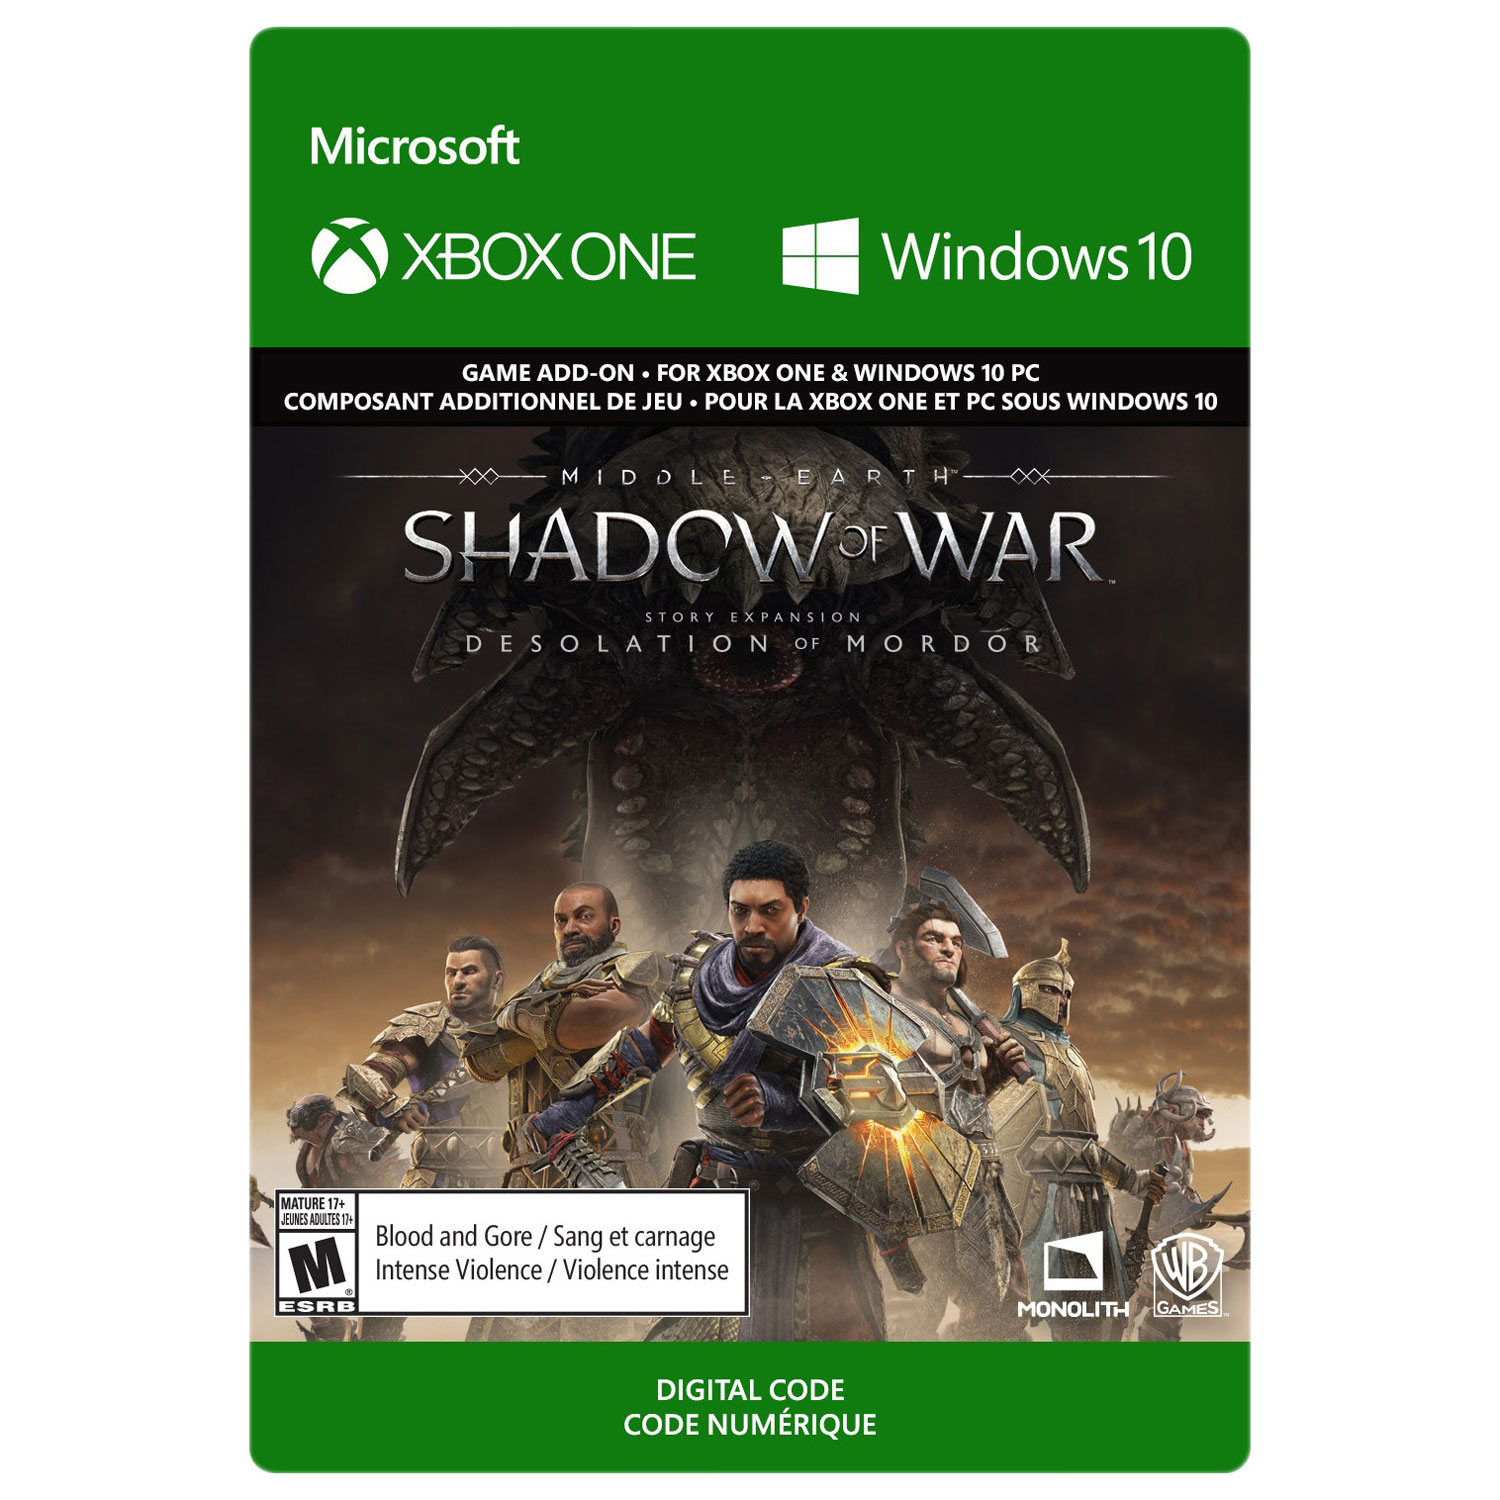 Middle Earth: Shadow of War Desolation of Mordor (Xbox One) - Digital Download